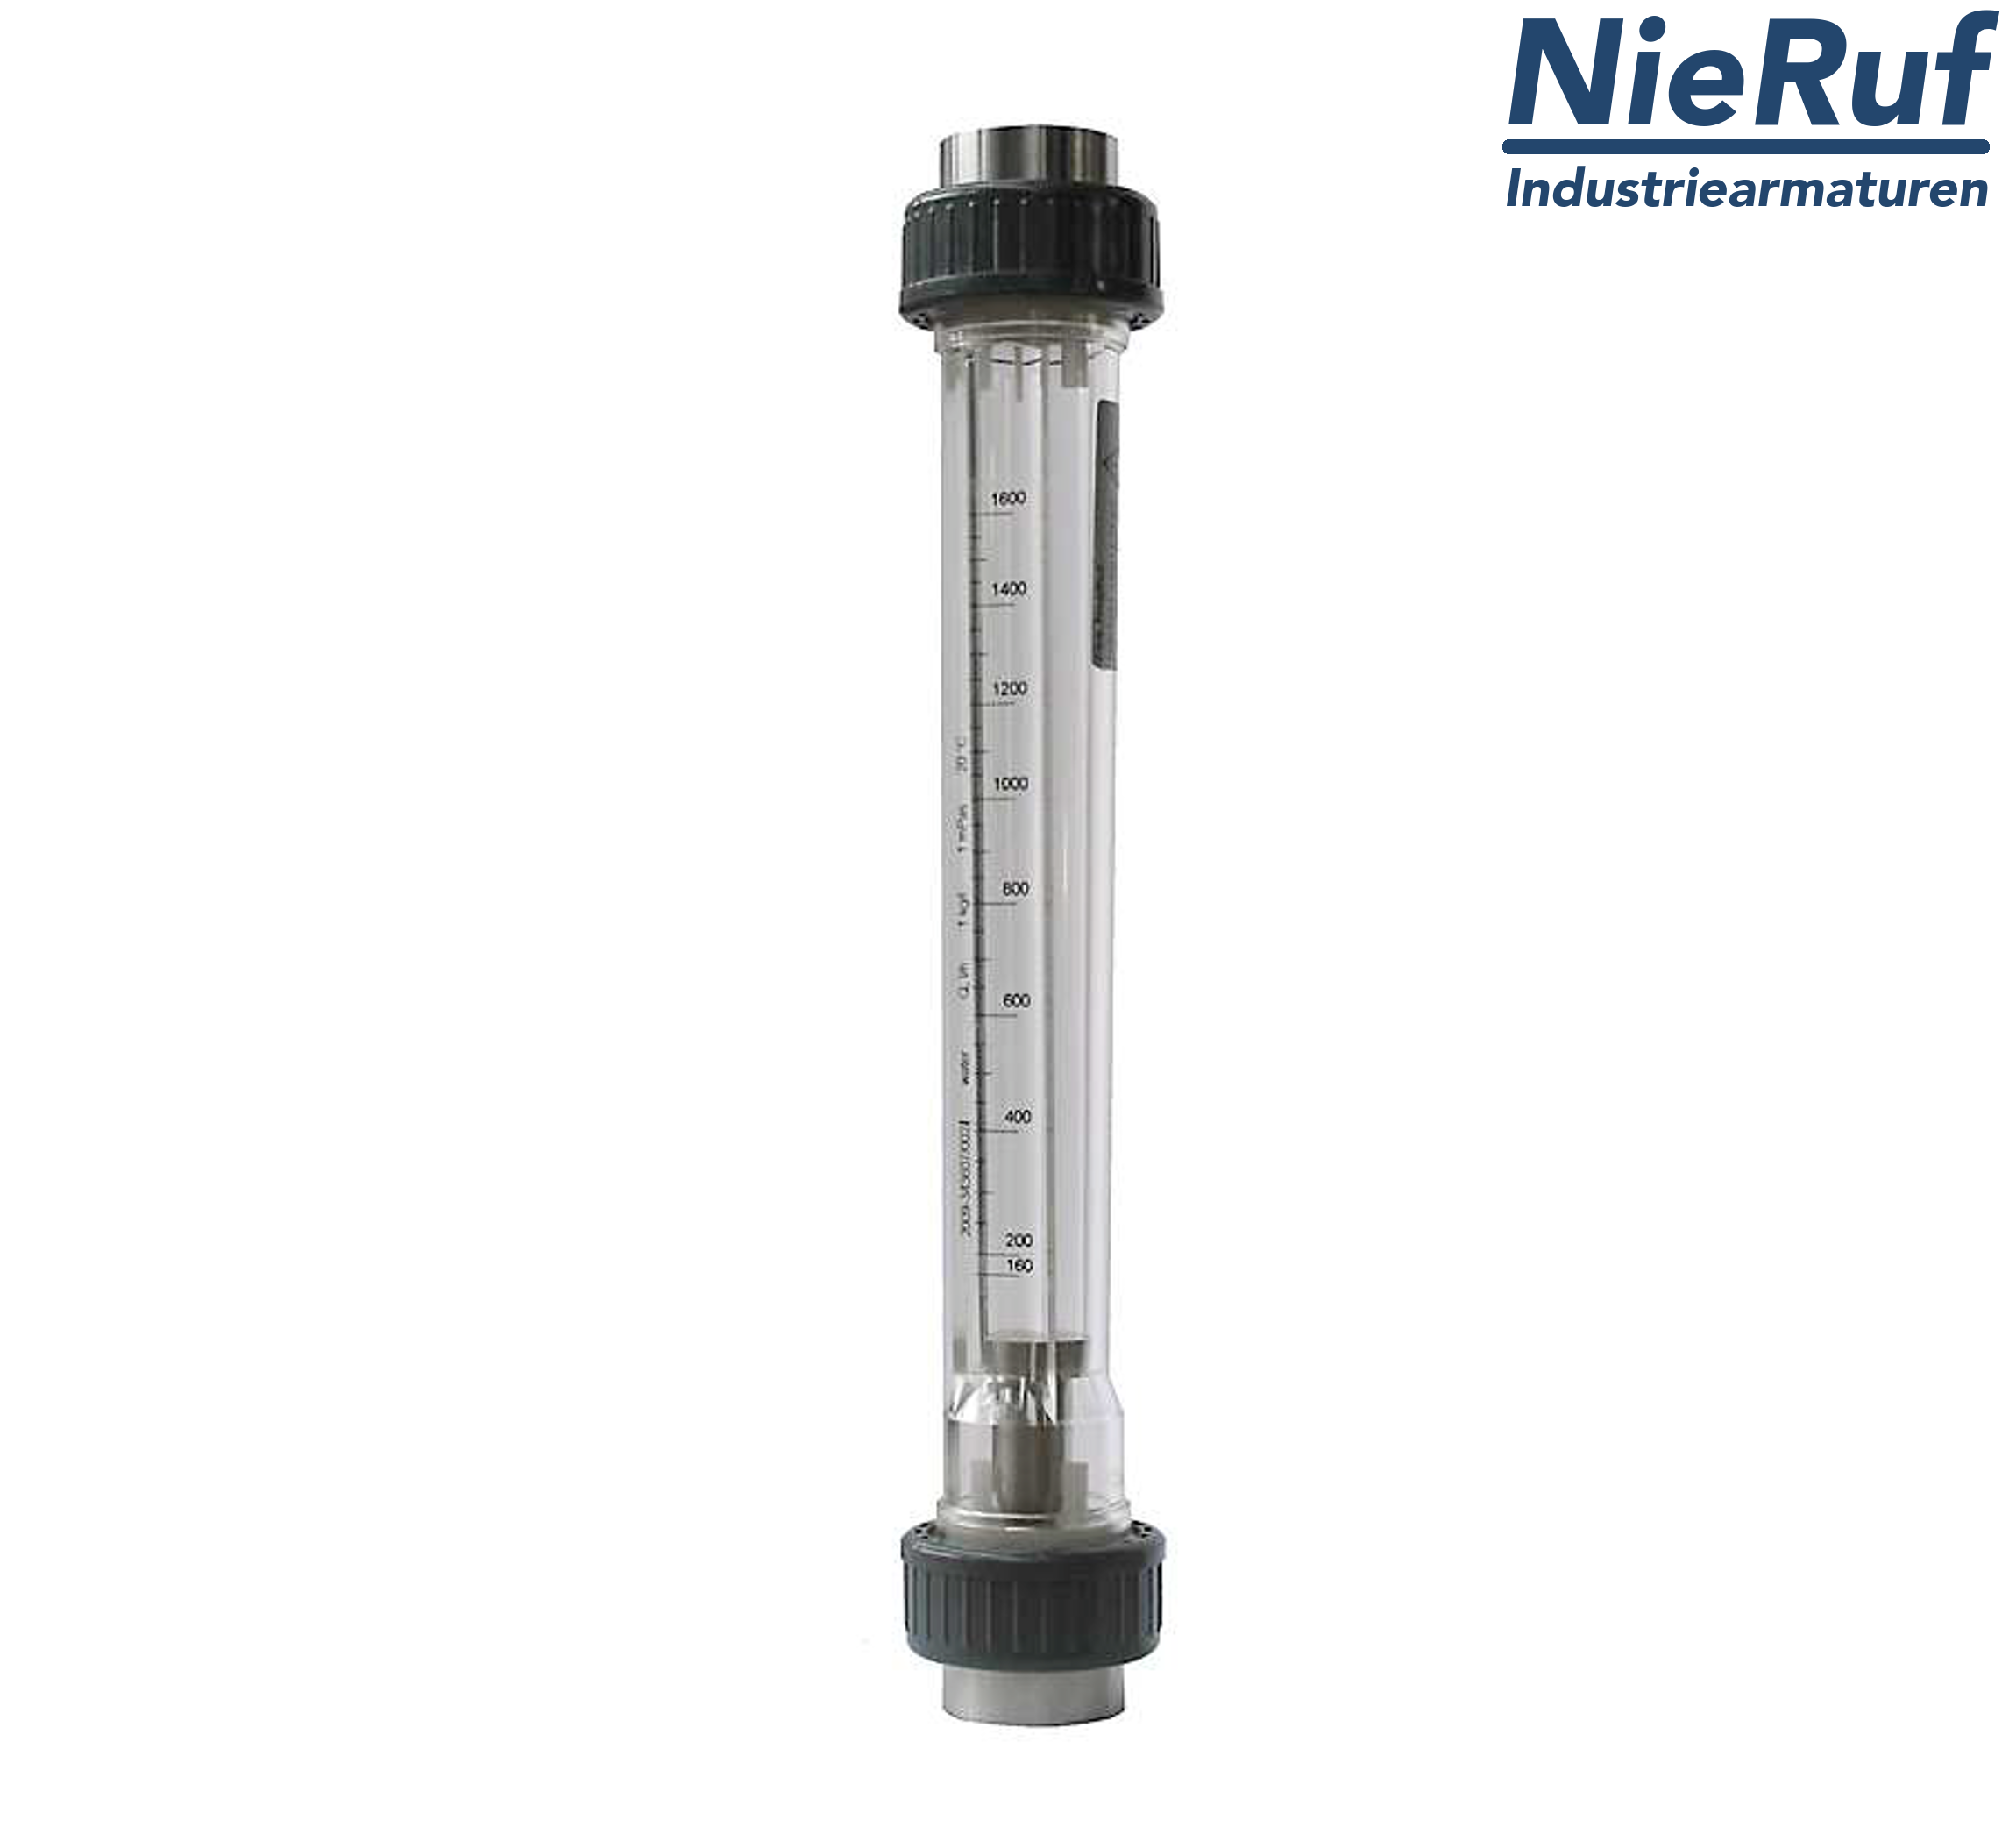 Variable area flowmeter 1" inch NPT 160.0 - 1600 l/h water FKM